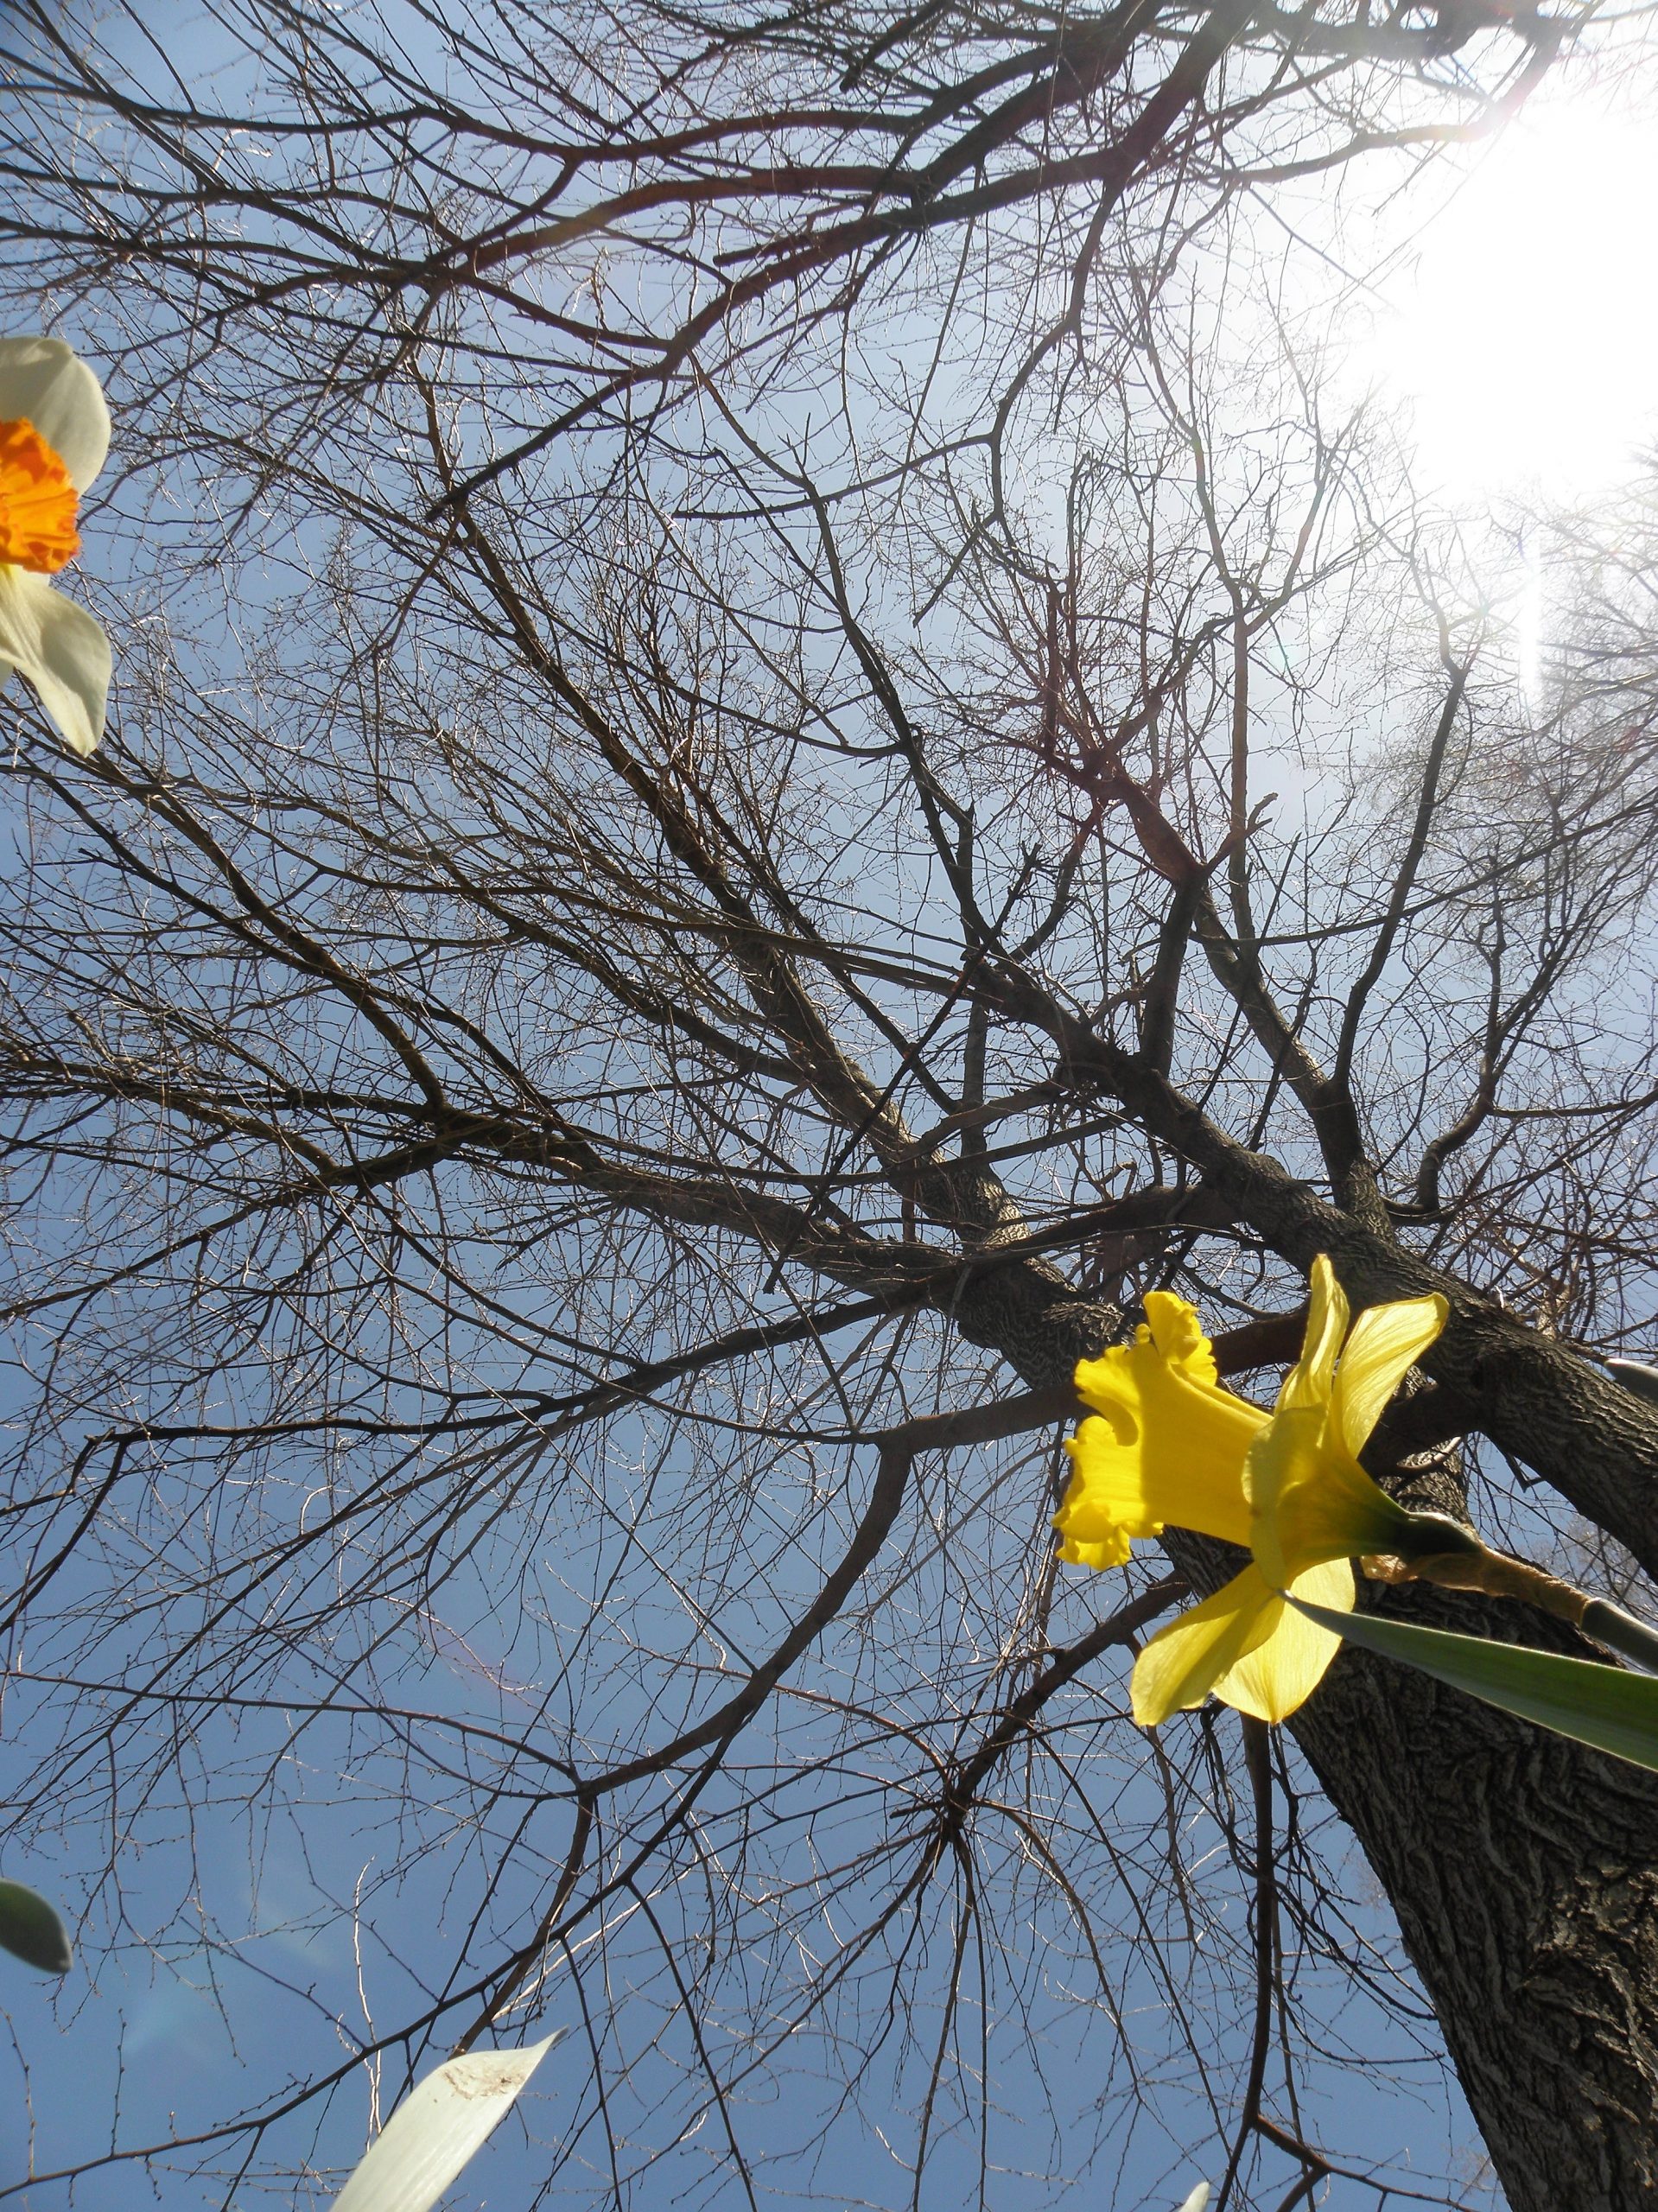 Daffodil & tree, Cleveland, 4/20/20